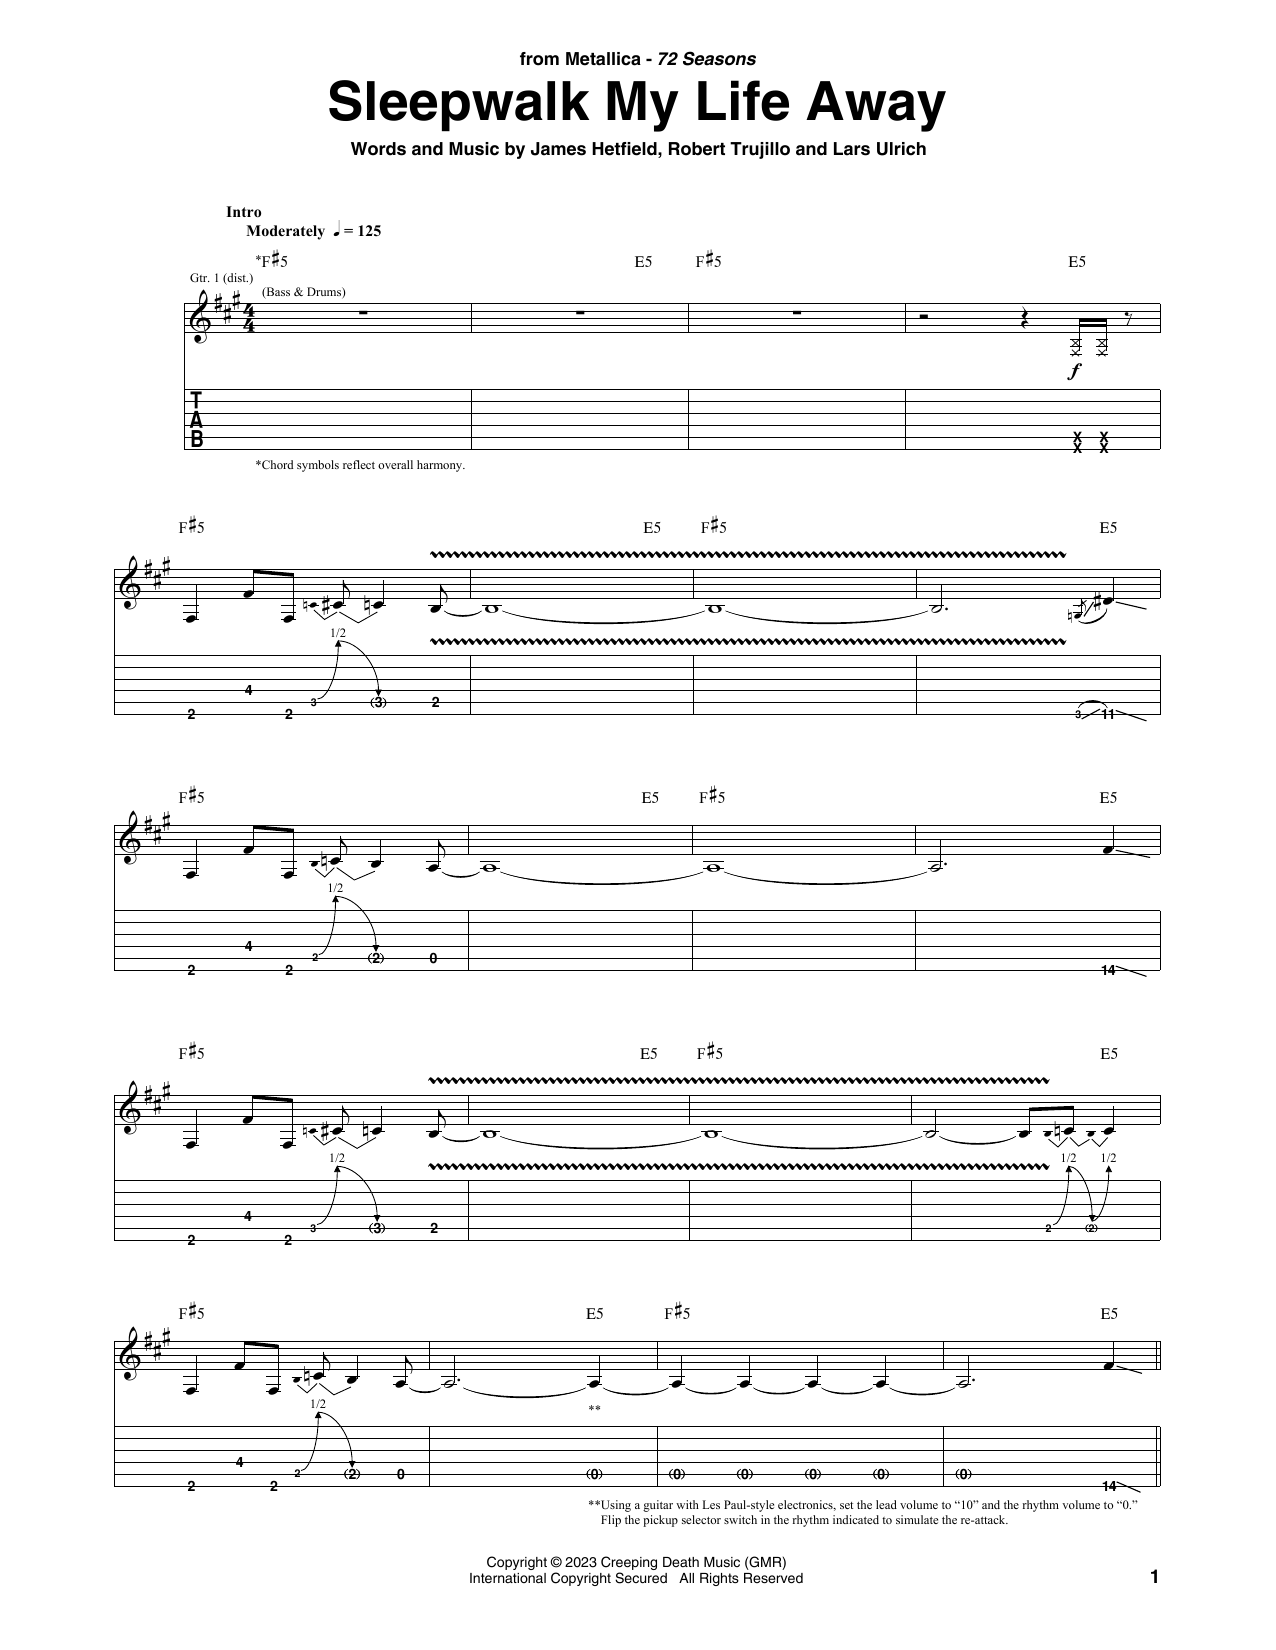 Metallica Sleepwalk My Life Away Sheet Music Notes & Chords for Guitar Tab - Download or Print PDF